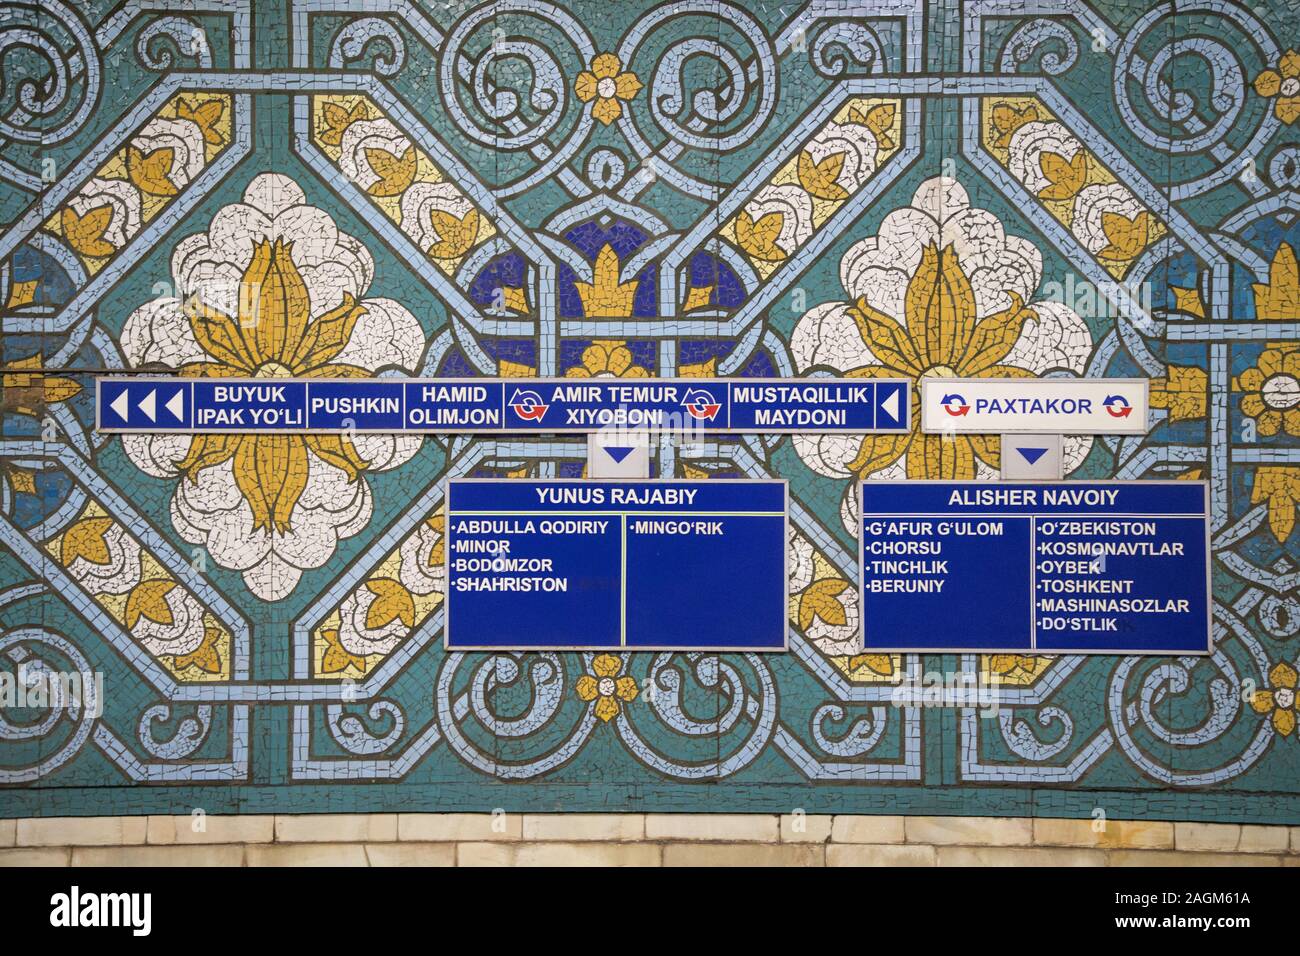 ornate tiles and mosaics inside tashkent metro system paxtakor station uzbekistan Stock Photo